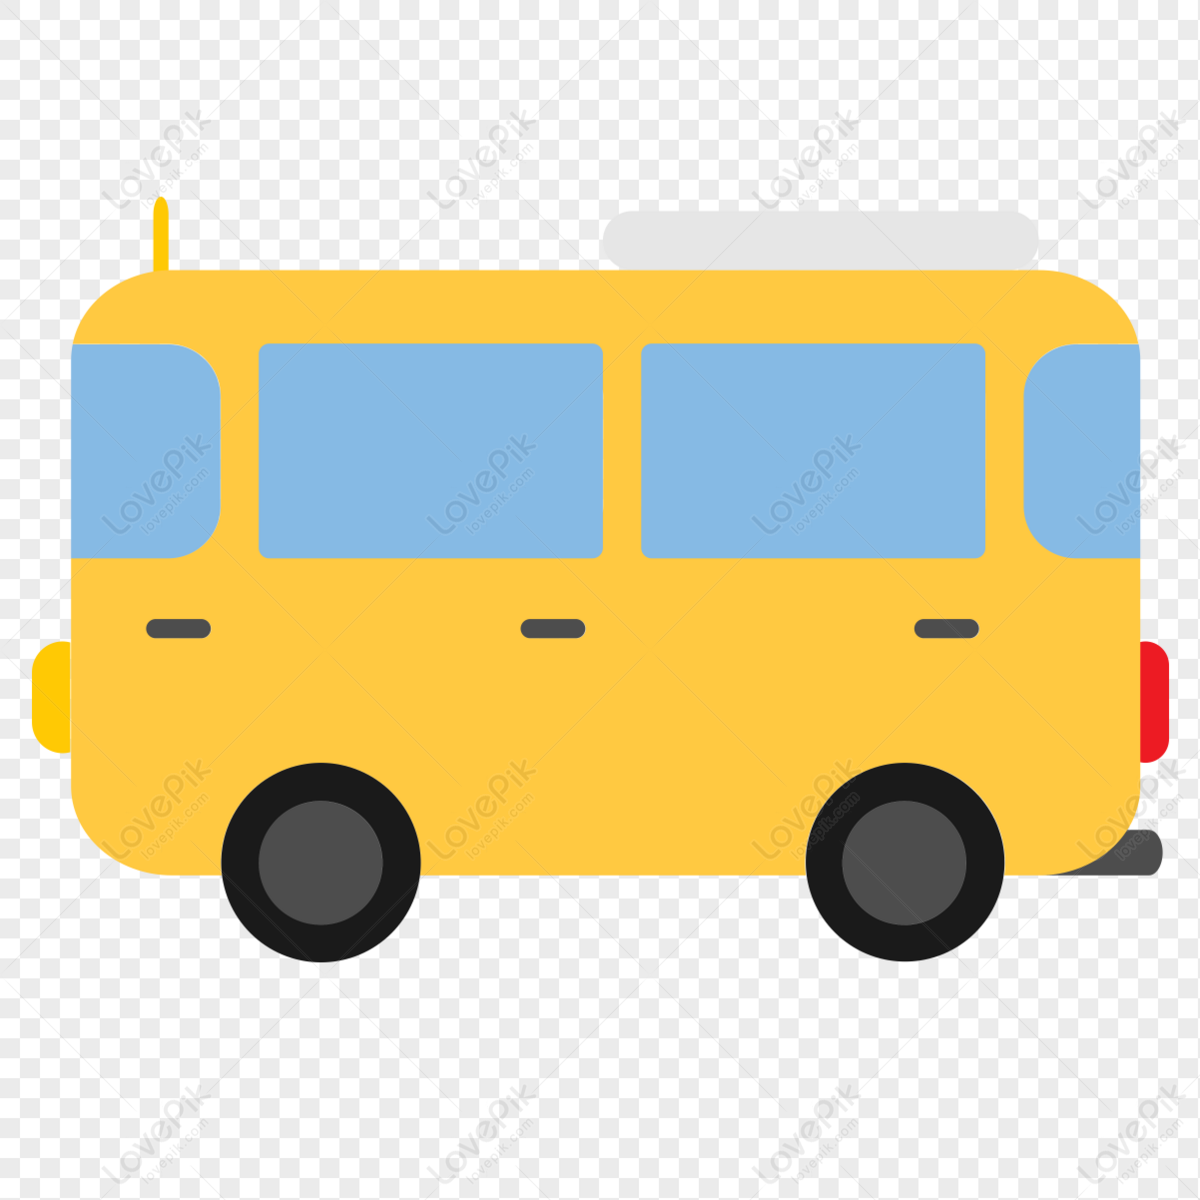 Vehicle bus icon free vector illustration material, material, icon, free materials png white transparent